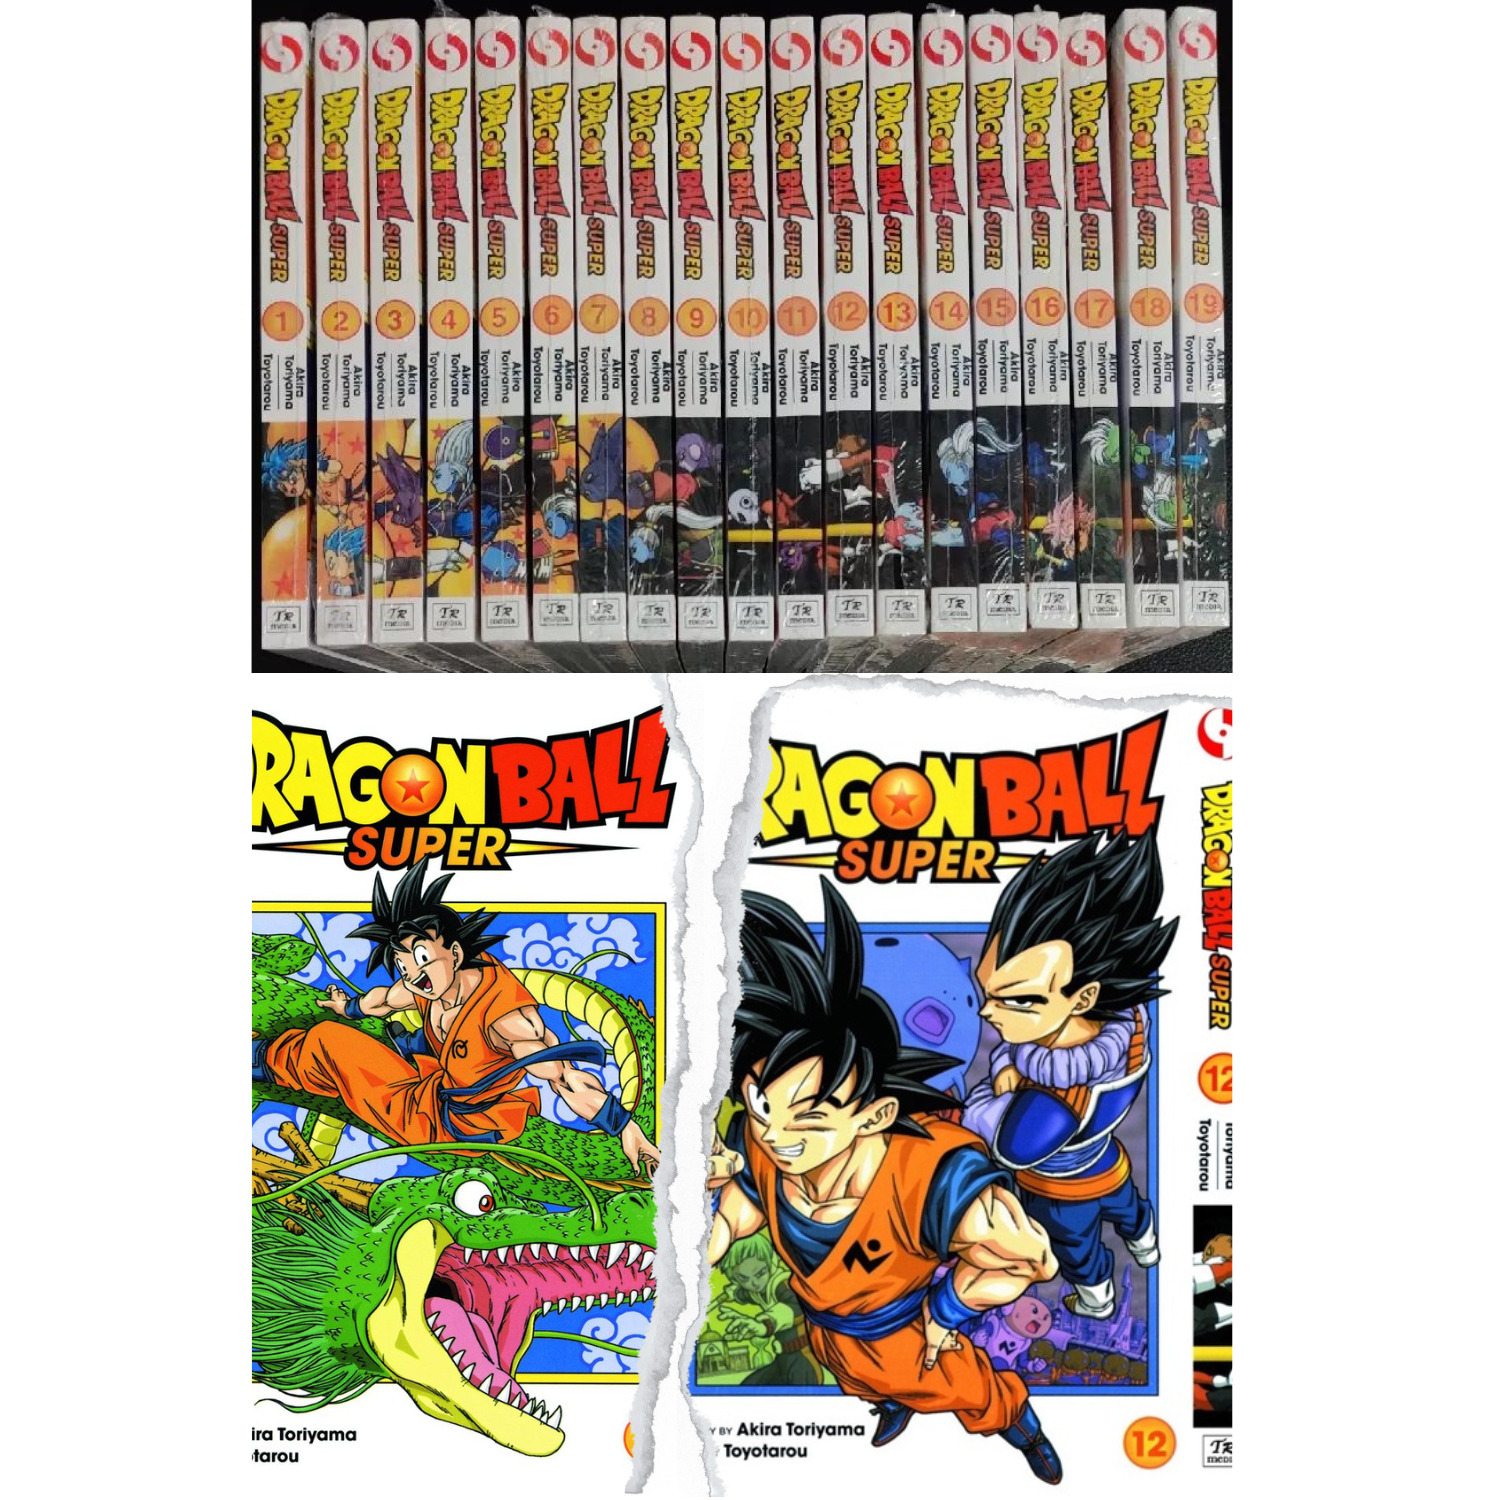 Dragon Ball Super English Comics Vol. 1-20 Complete Set Physical Book Manga New